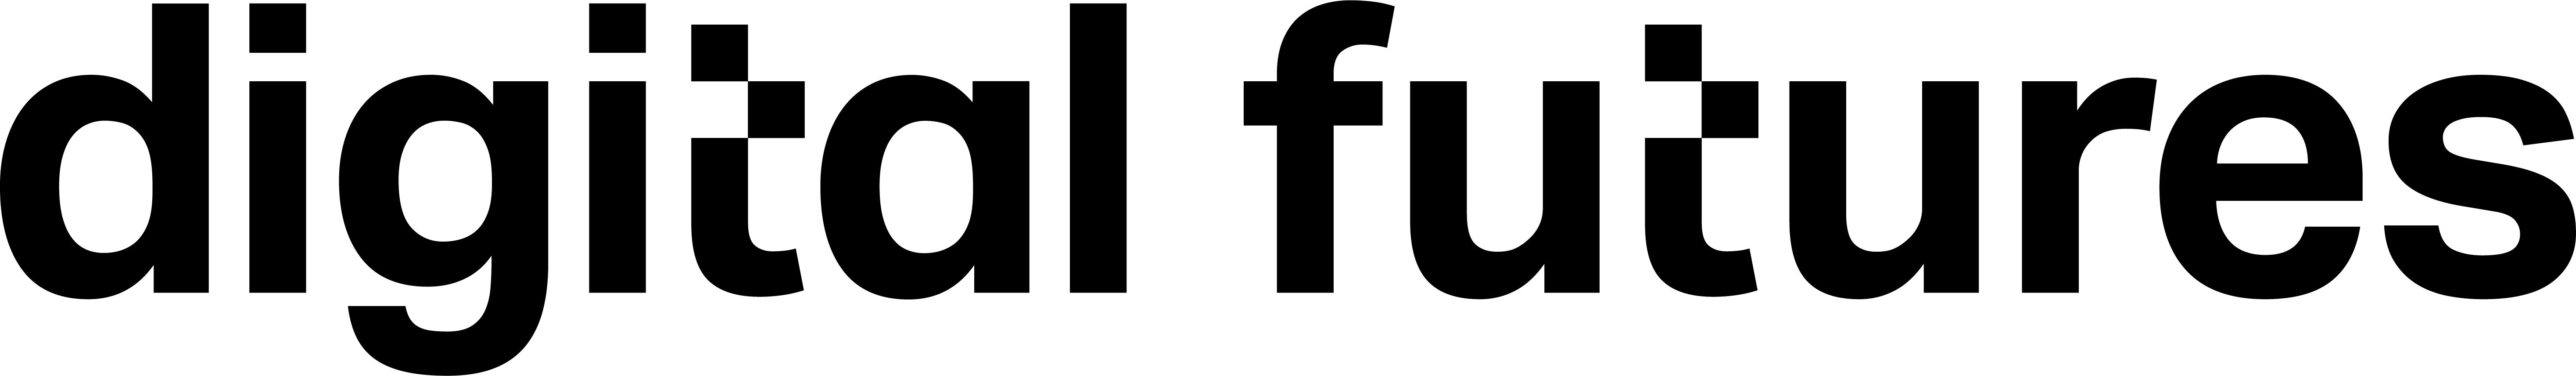 Digital Futures logotype